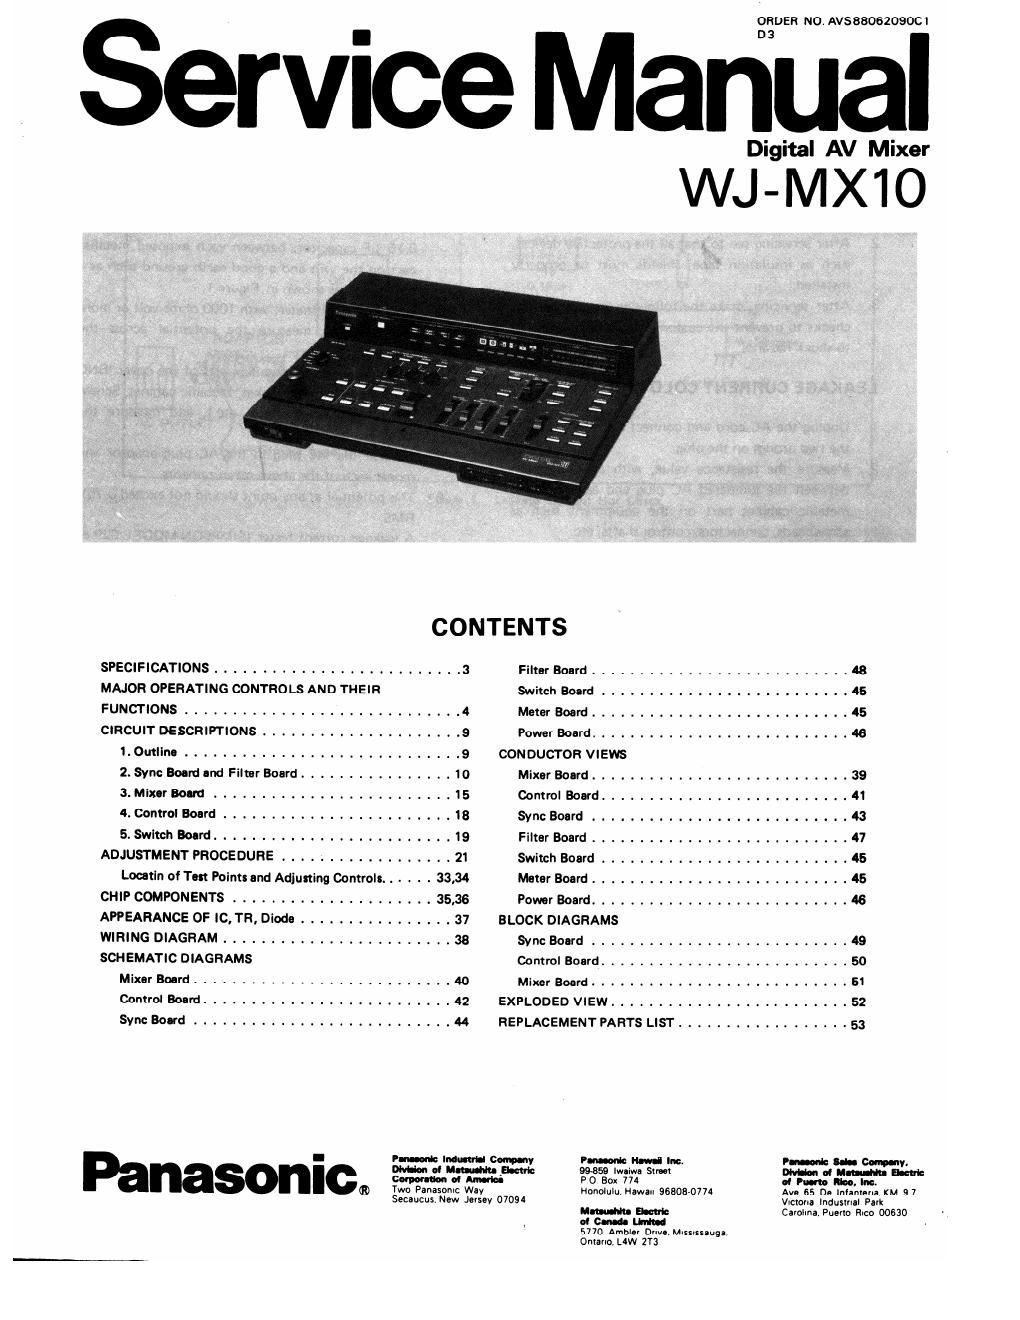 panasonic wj mx 10 service manual